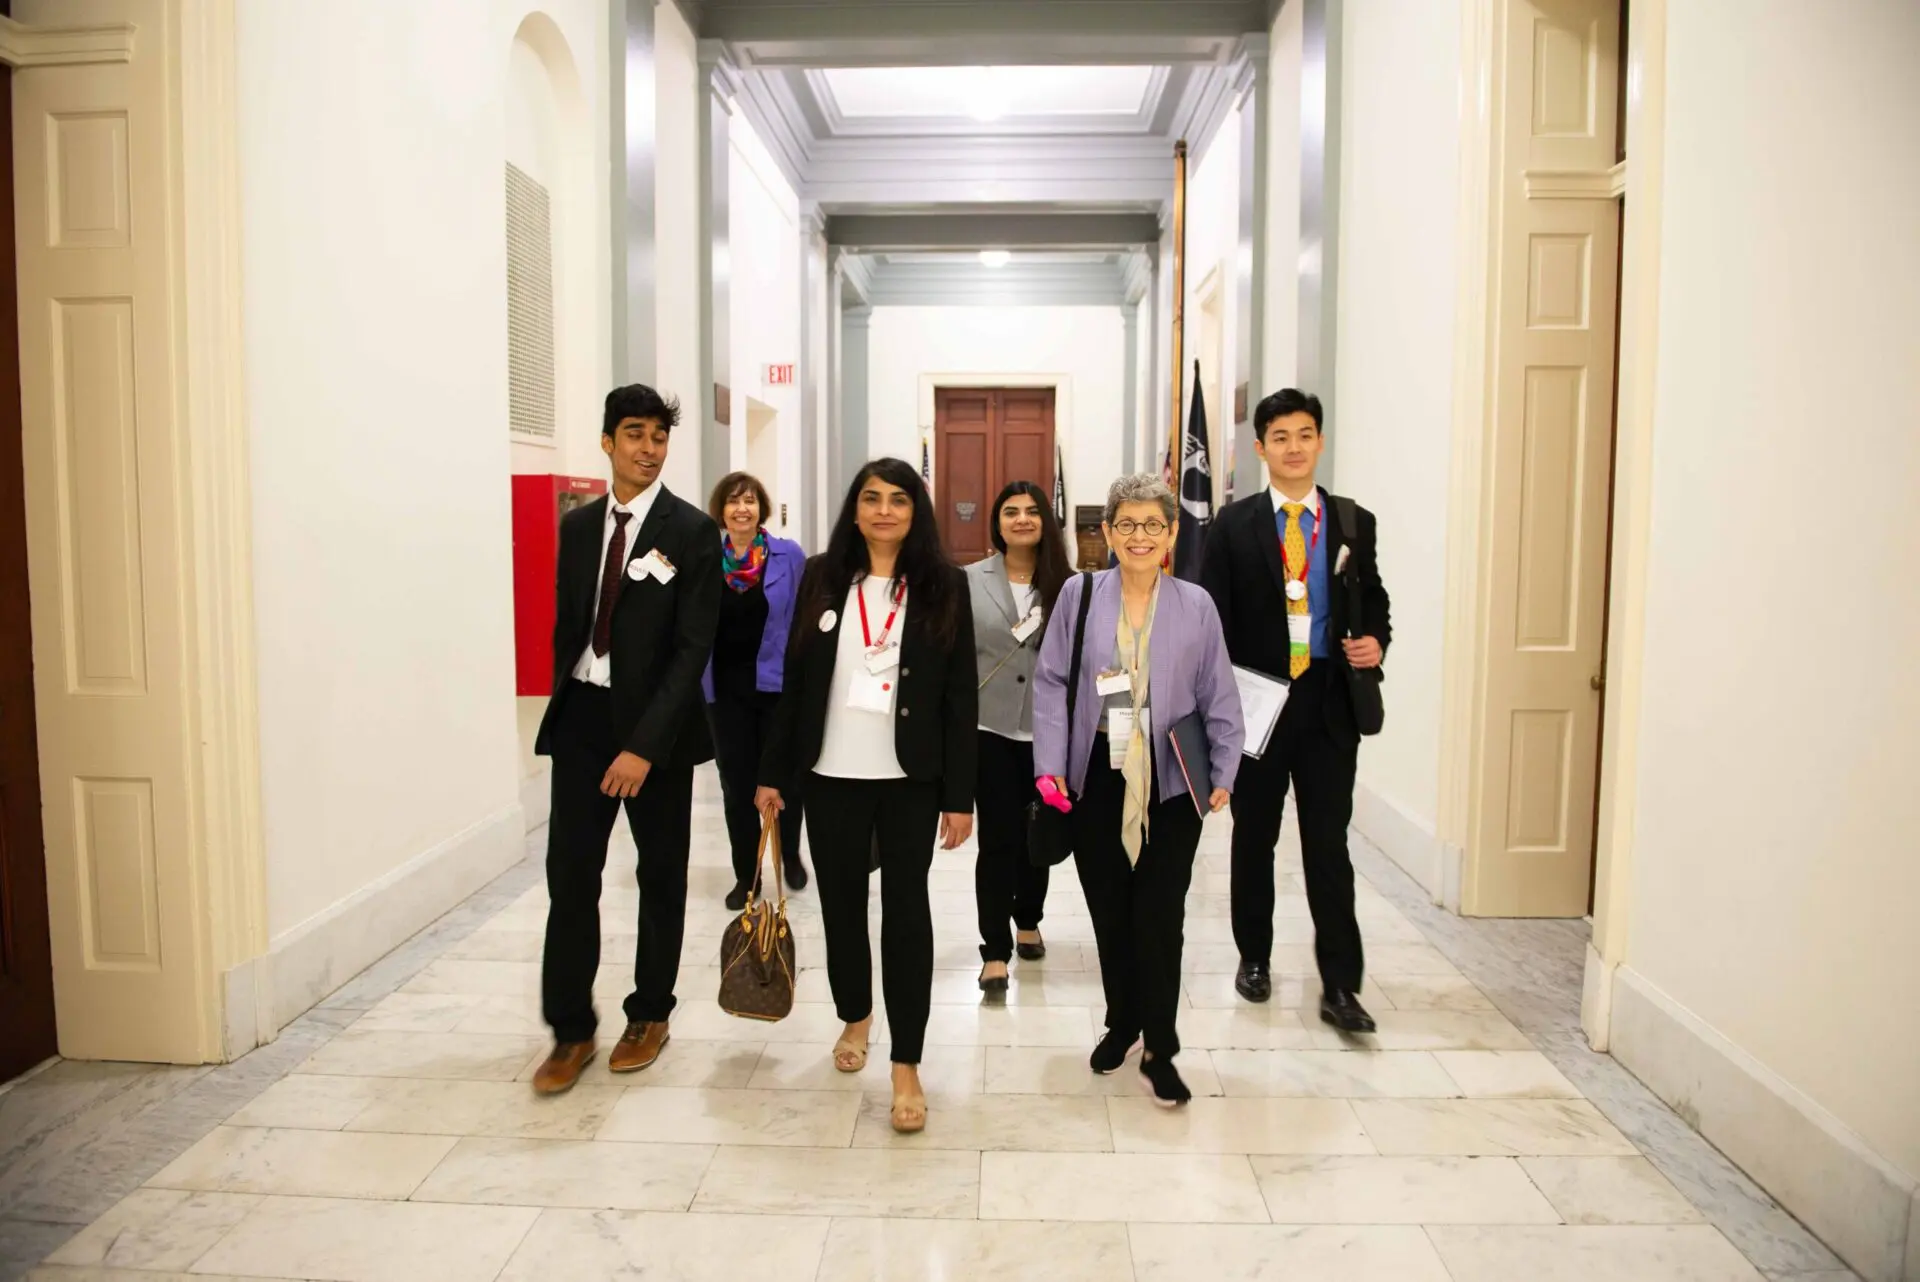 Walking the halls of Congress